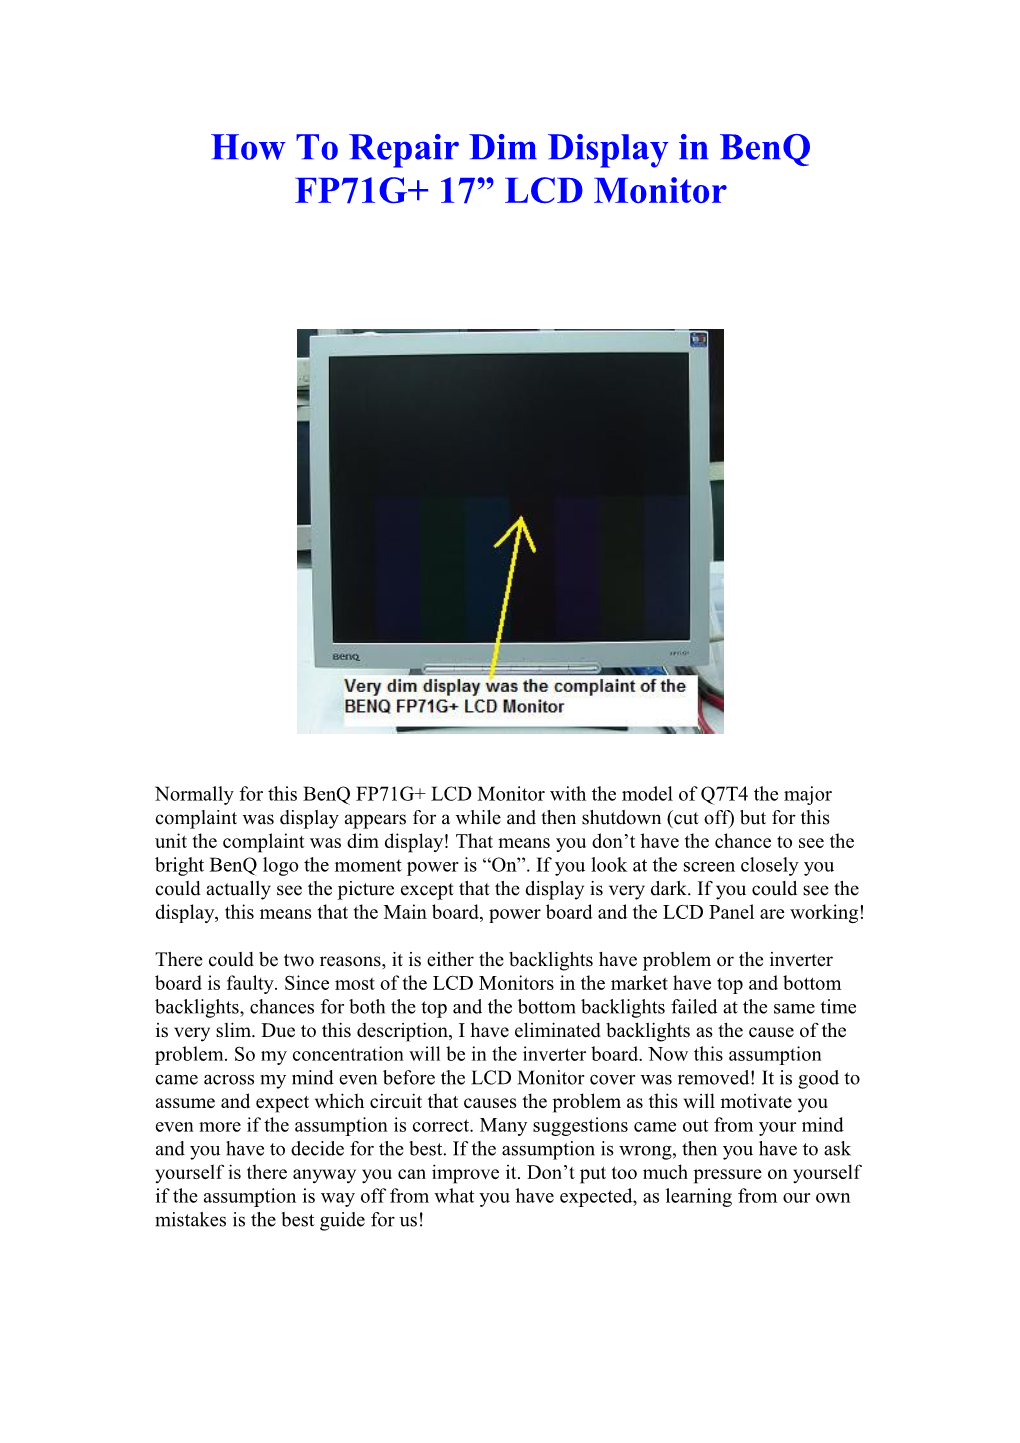 How to Repair Dim Display in Benq FP71G+ 17 LCD Monitor